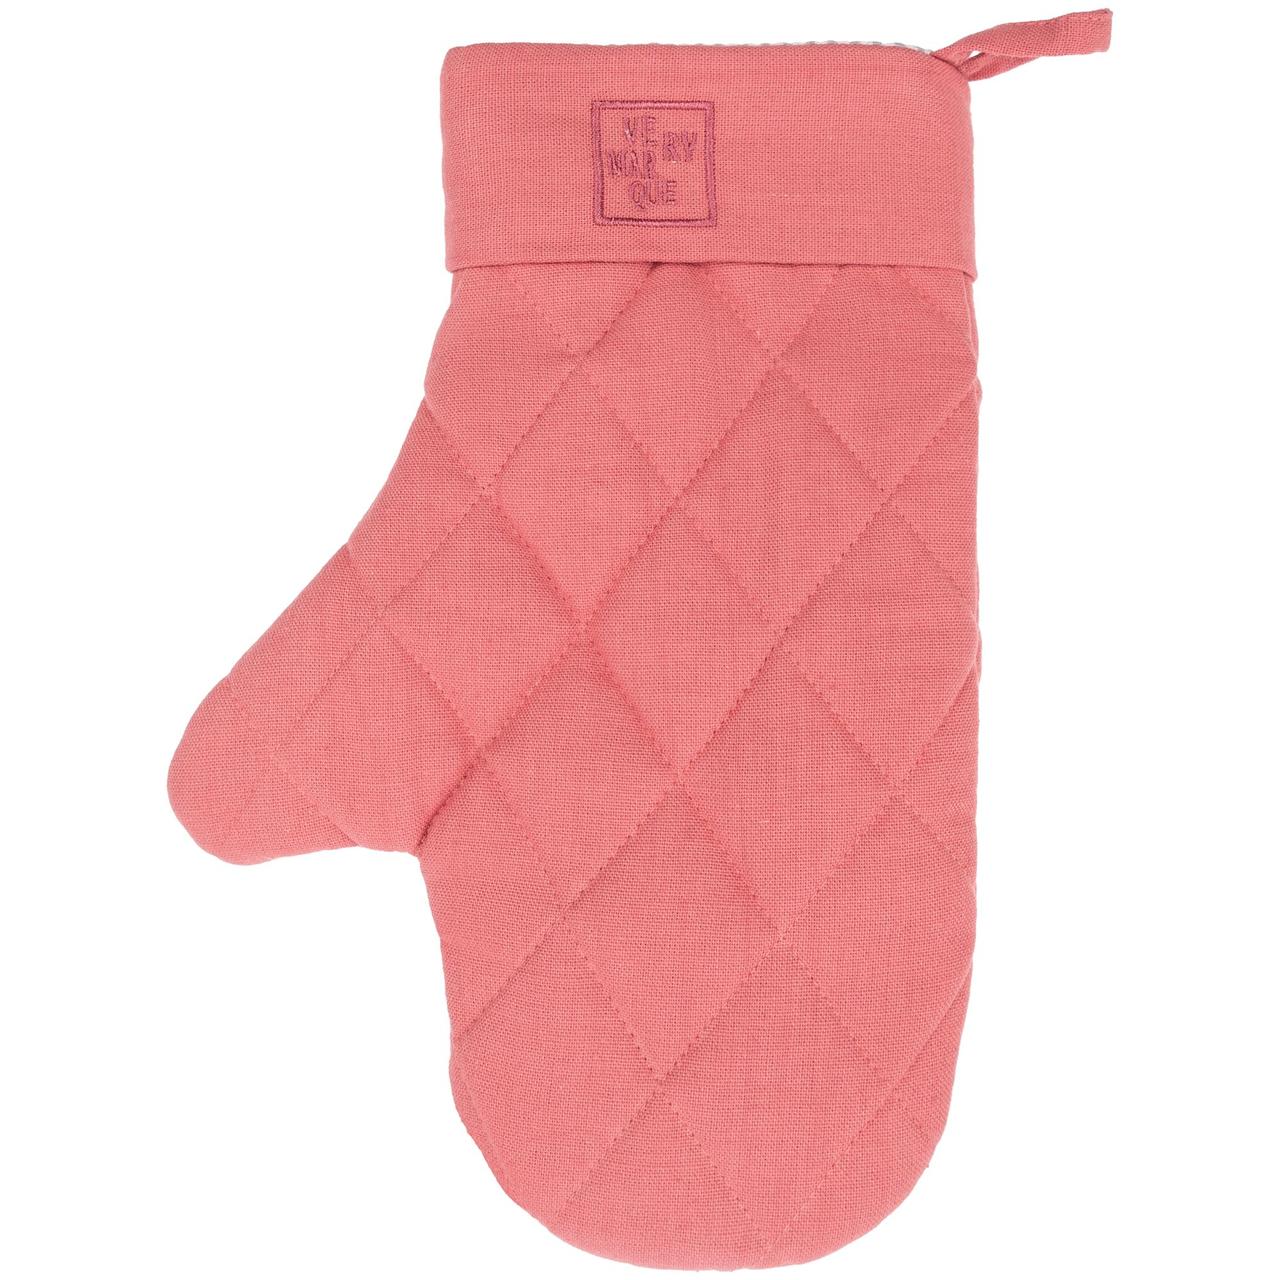 Прихватка-рукавица Feast Mist, розовая (артикул 12455.51), фото 1